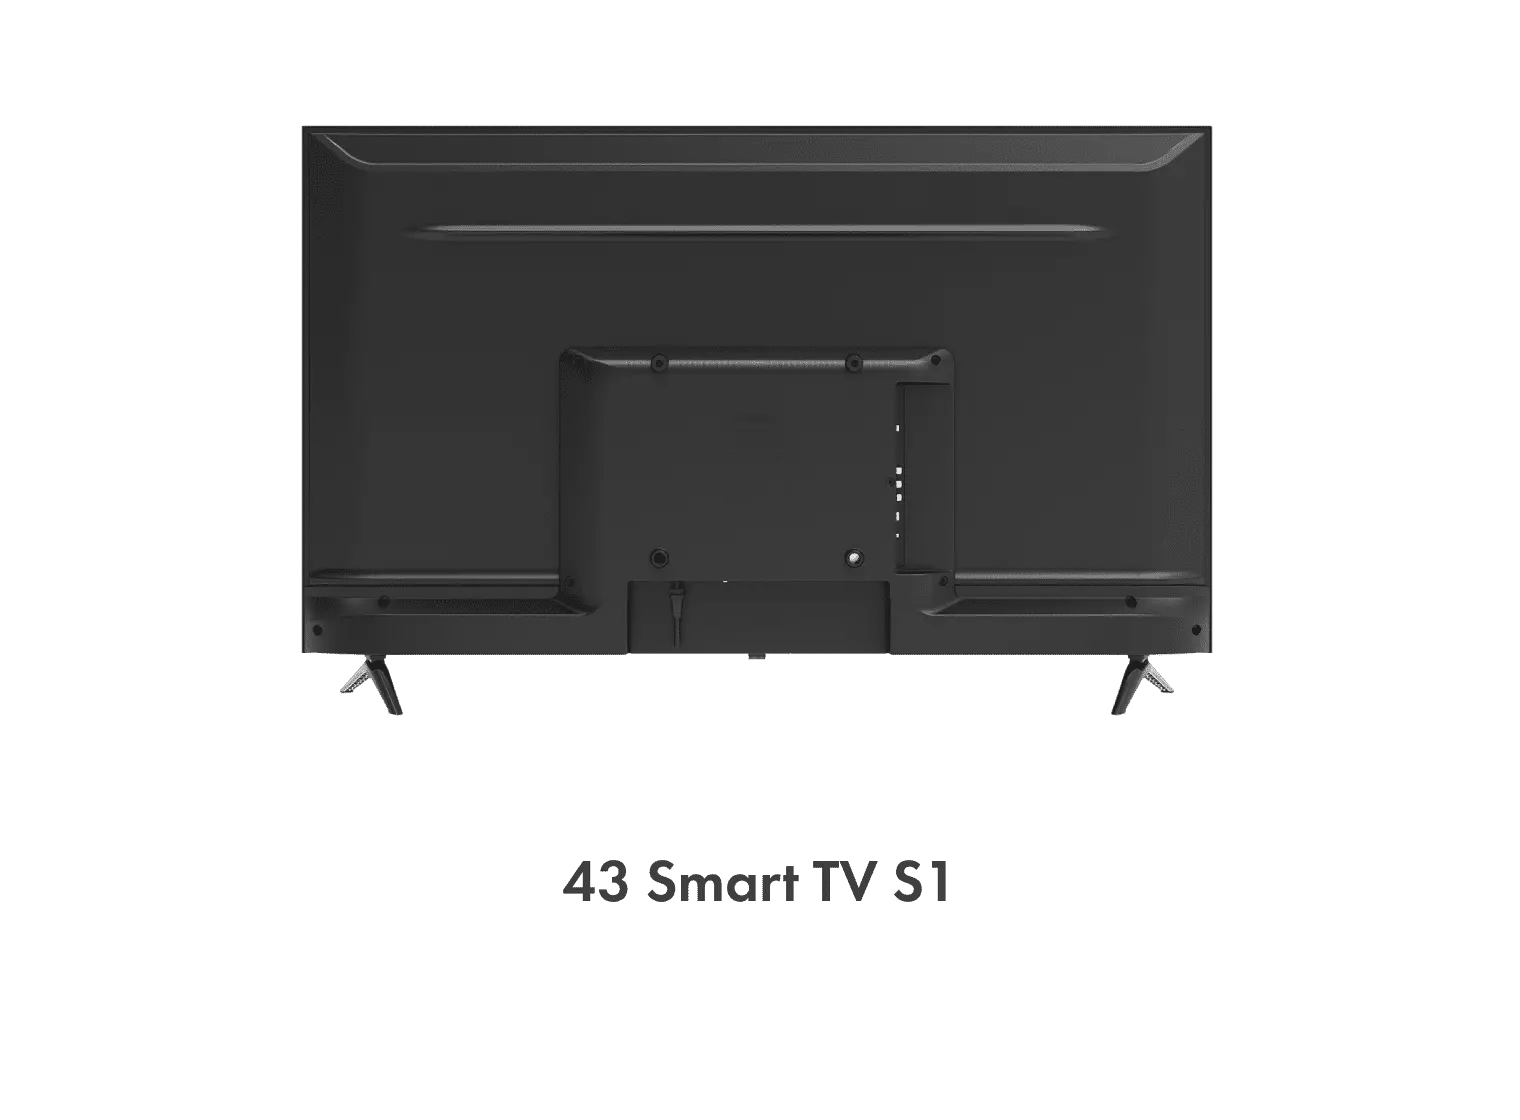 Телевизор Haier 43 Smart TV S1